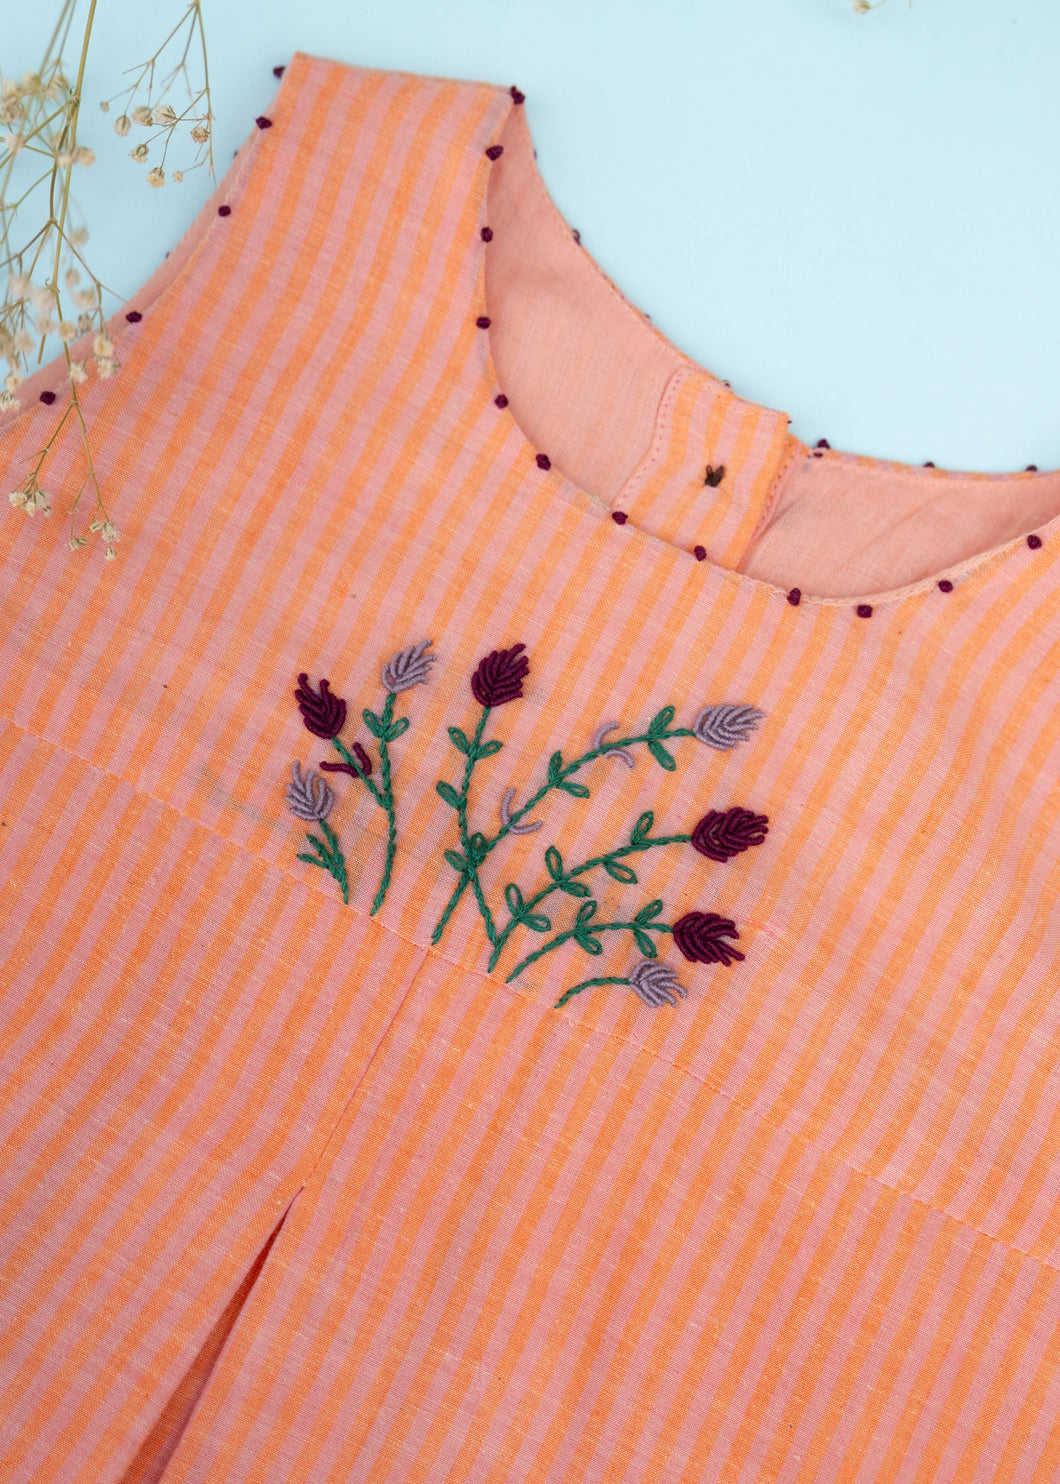 Vintage Frock | Handwoven Cotton | Pink and Orange Stripe